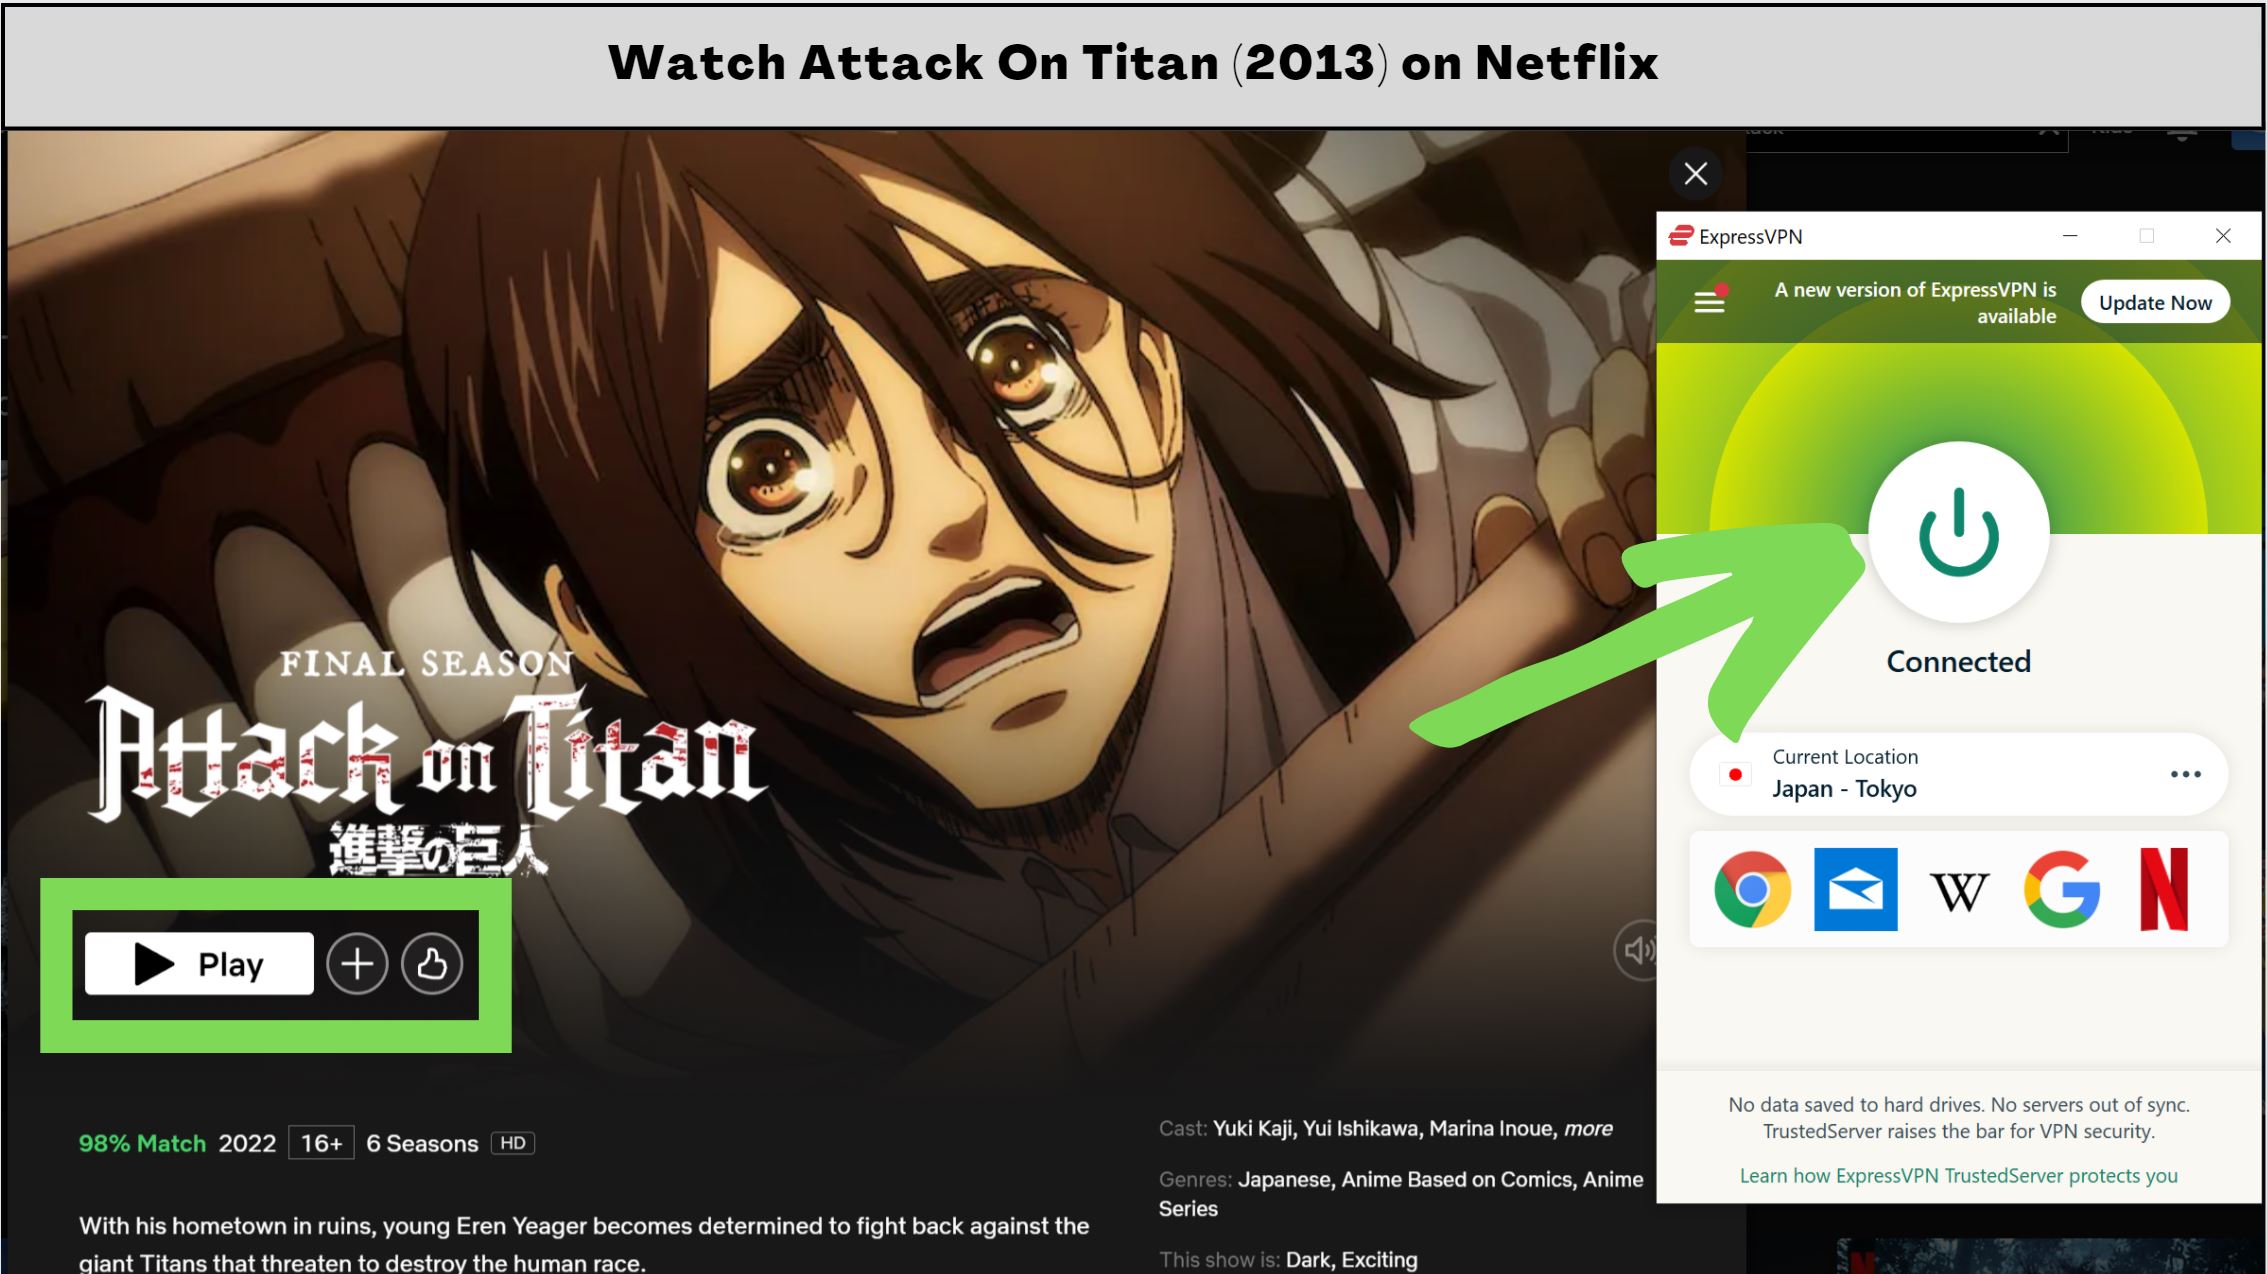 watch Attack on Titan on Netflix